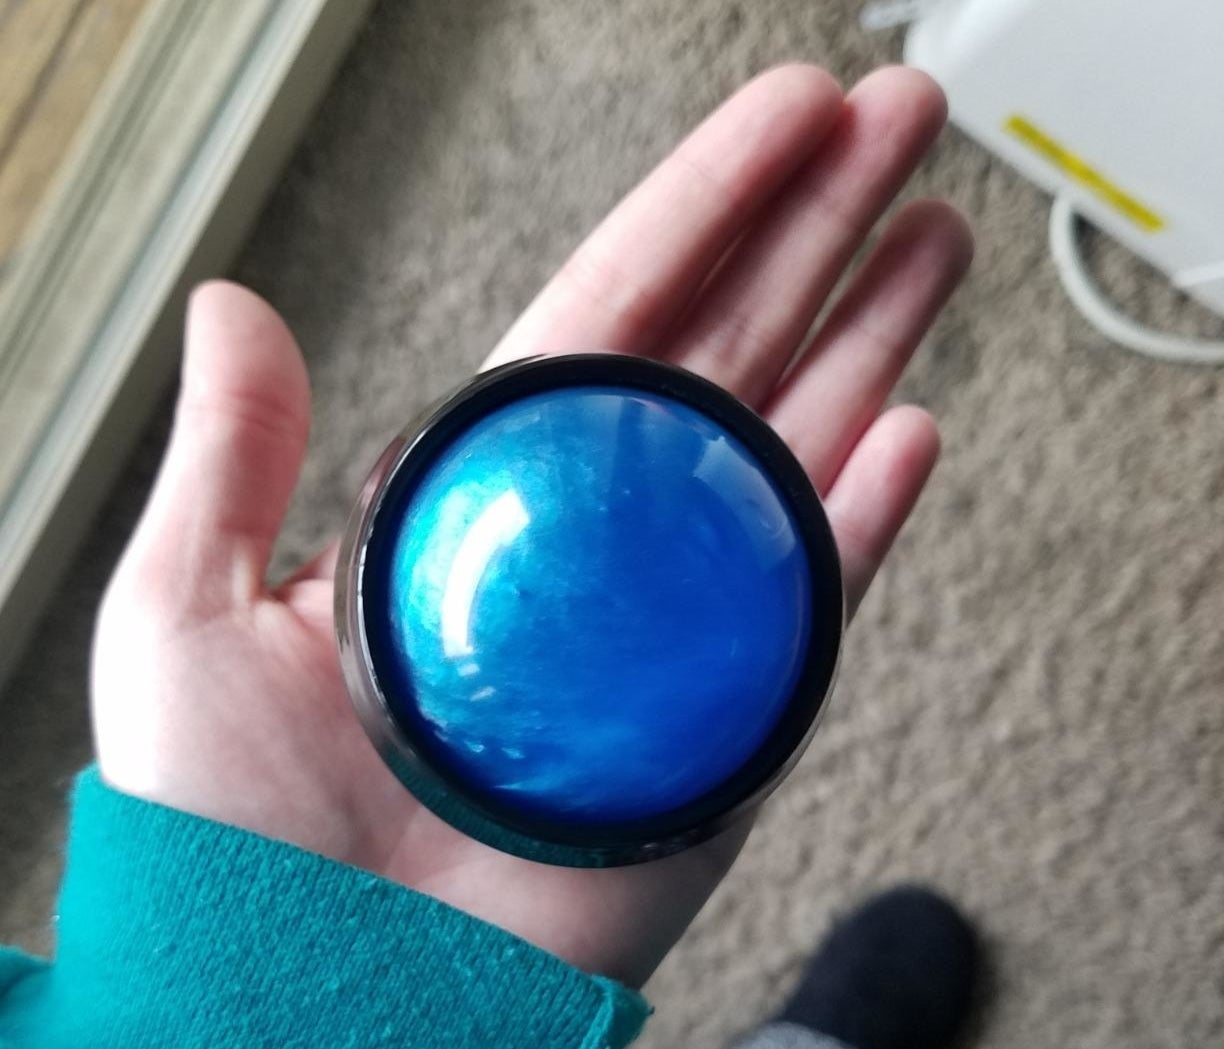 Reviewer hand holding the blue massage ball